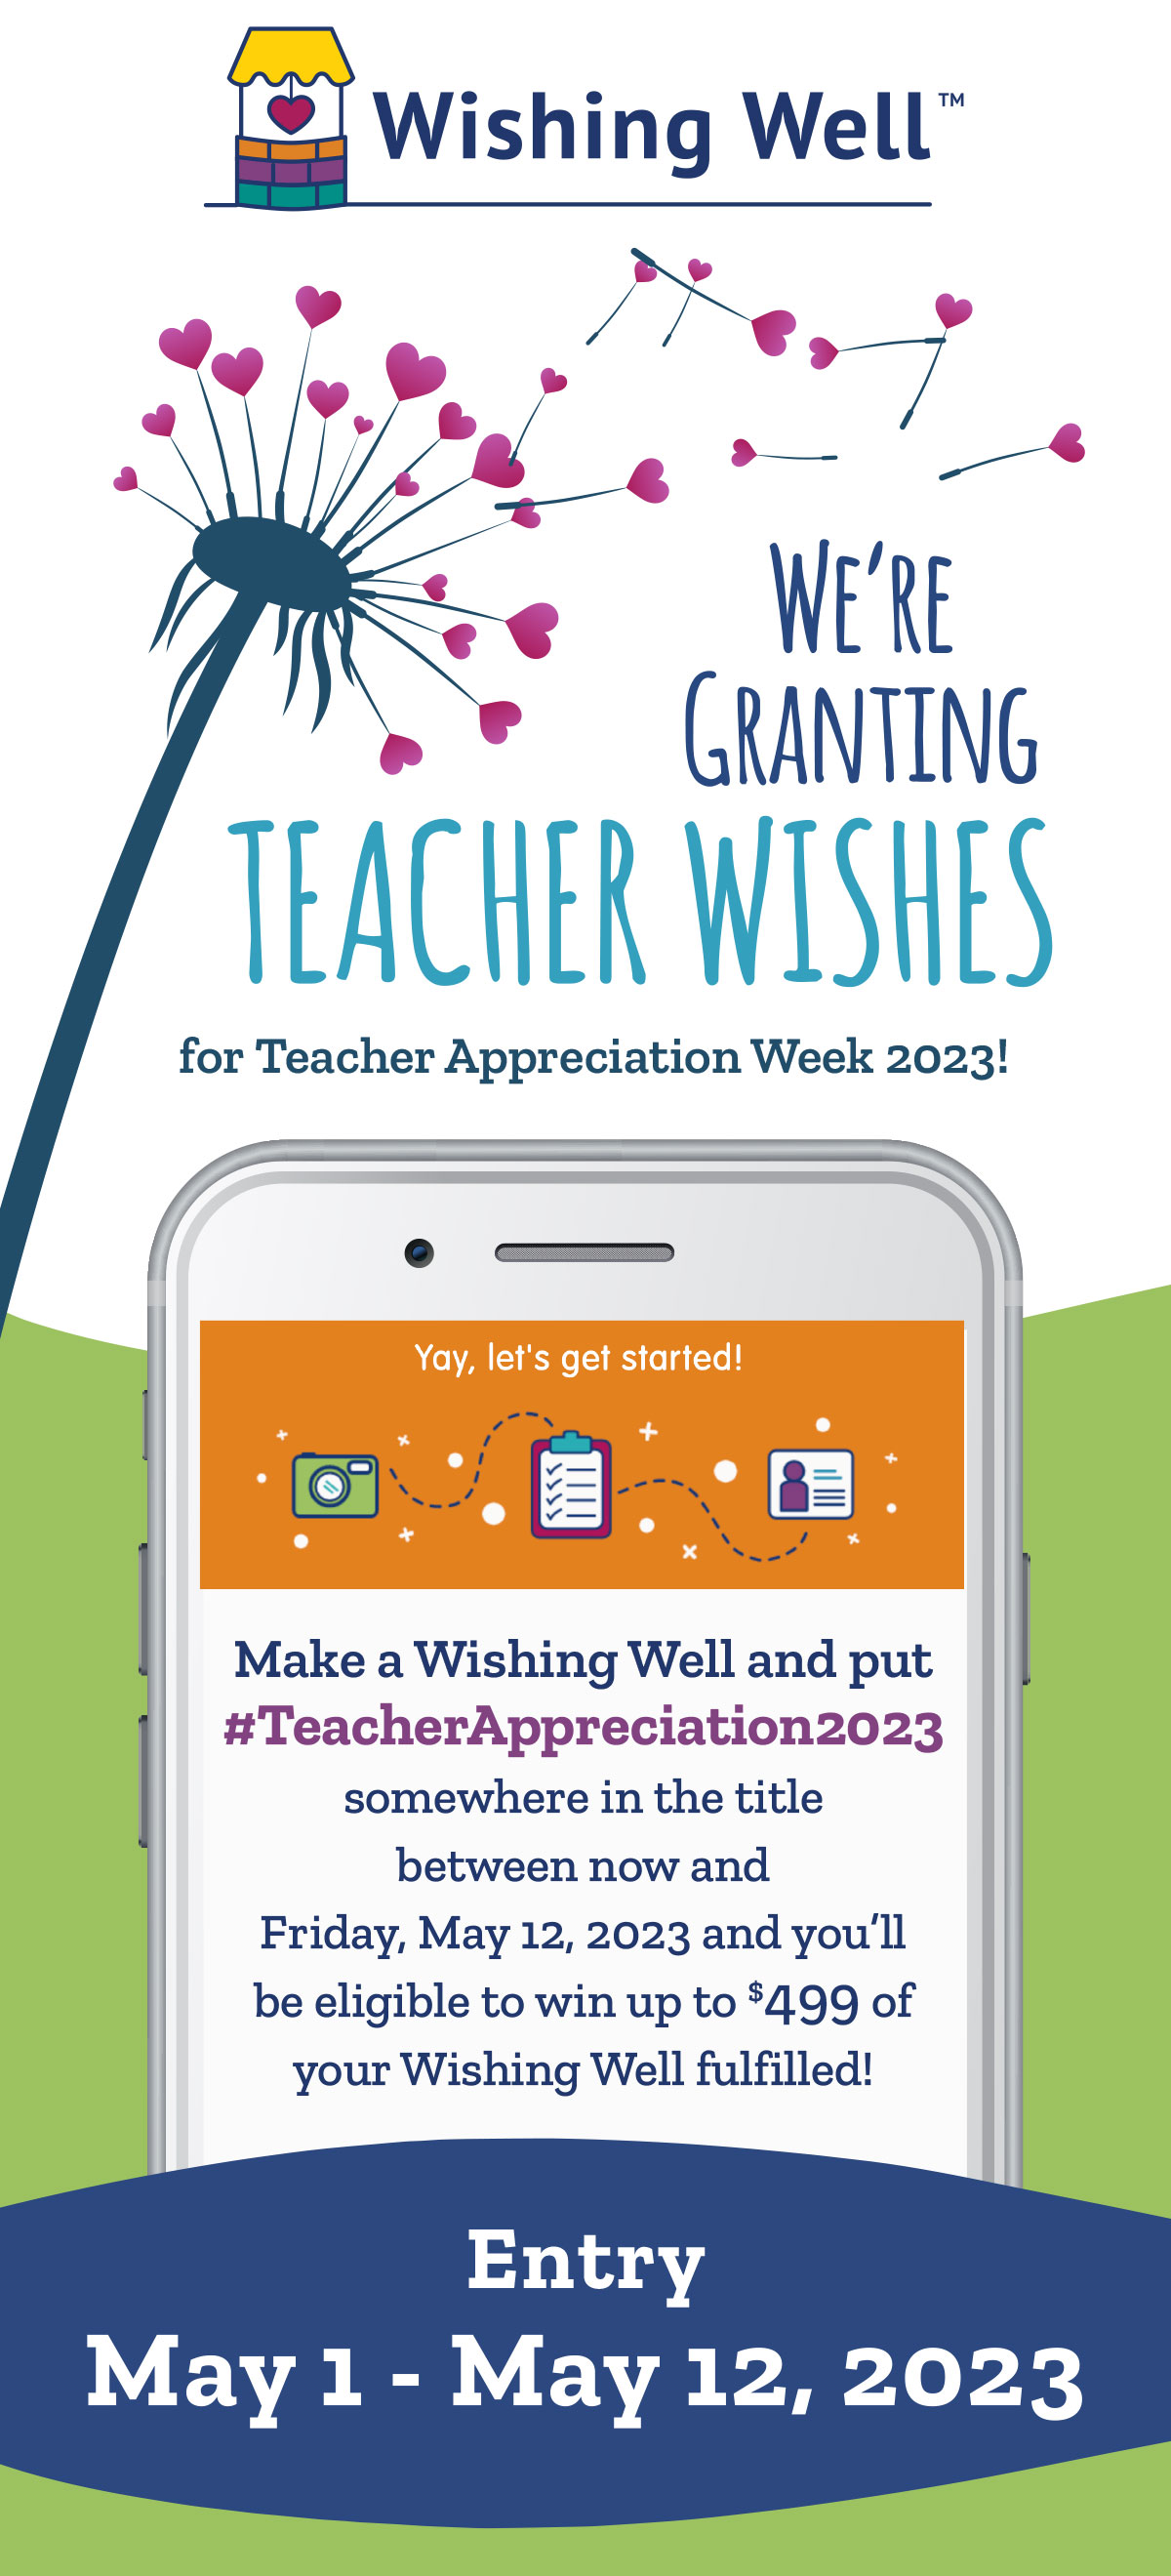 We're Granting Teacher Wishes for Teacher Appreciation Week 2023!